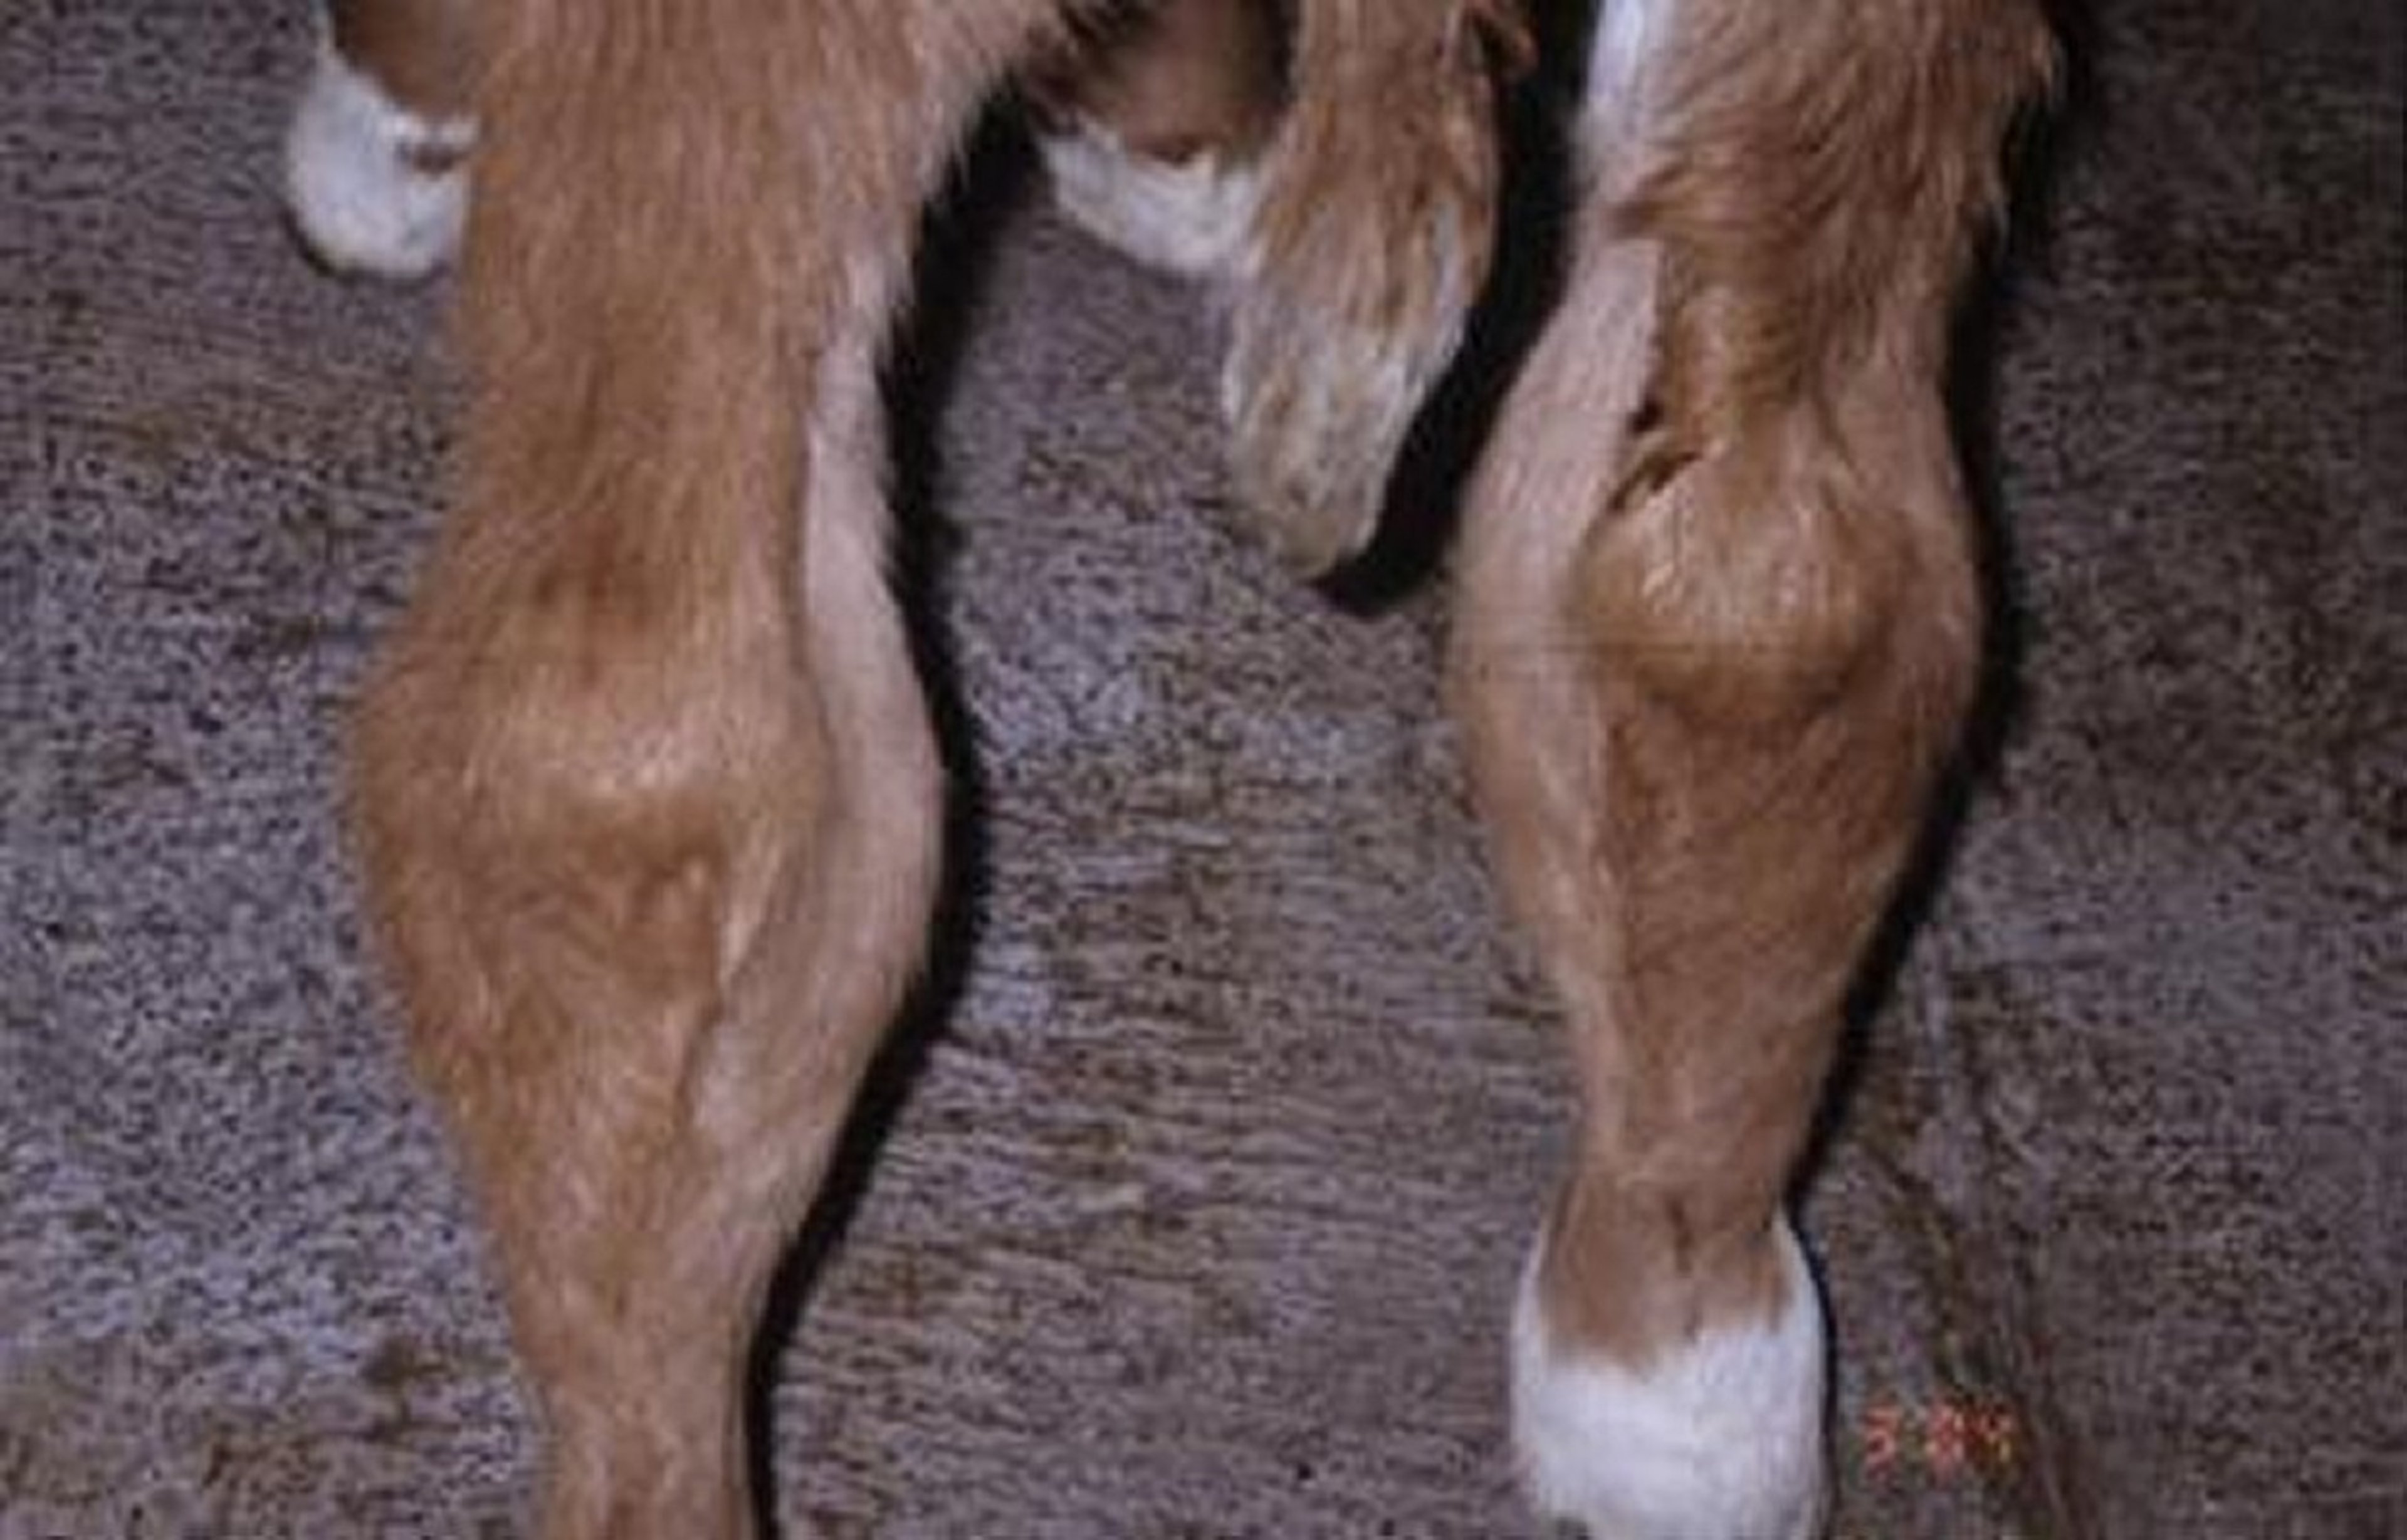 Septic arthritis, tarsocrural joints, calf